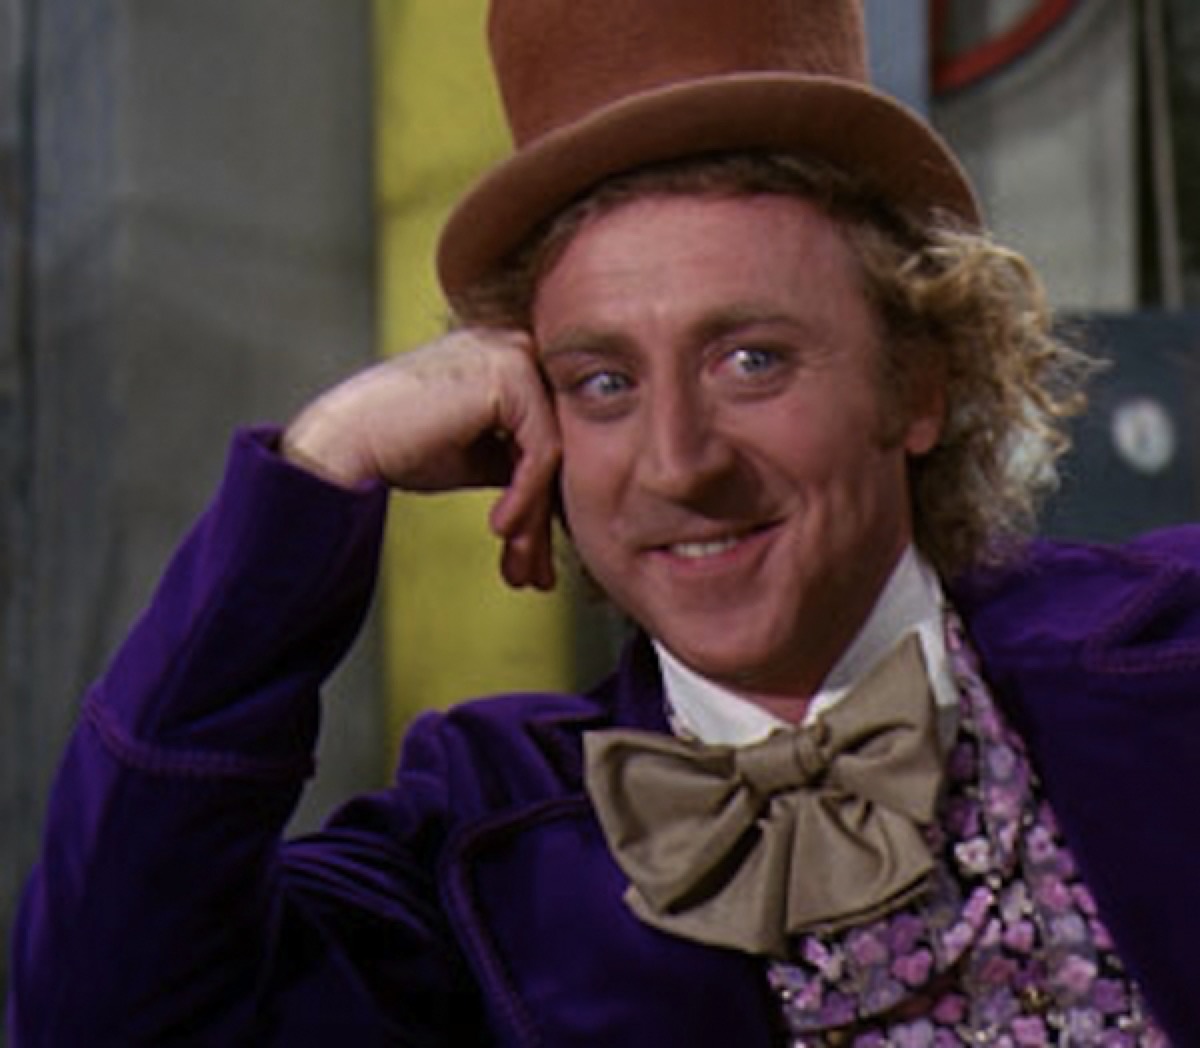 Gene Wilder in top hat, bowtie, and purple tux as Willy Wonka